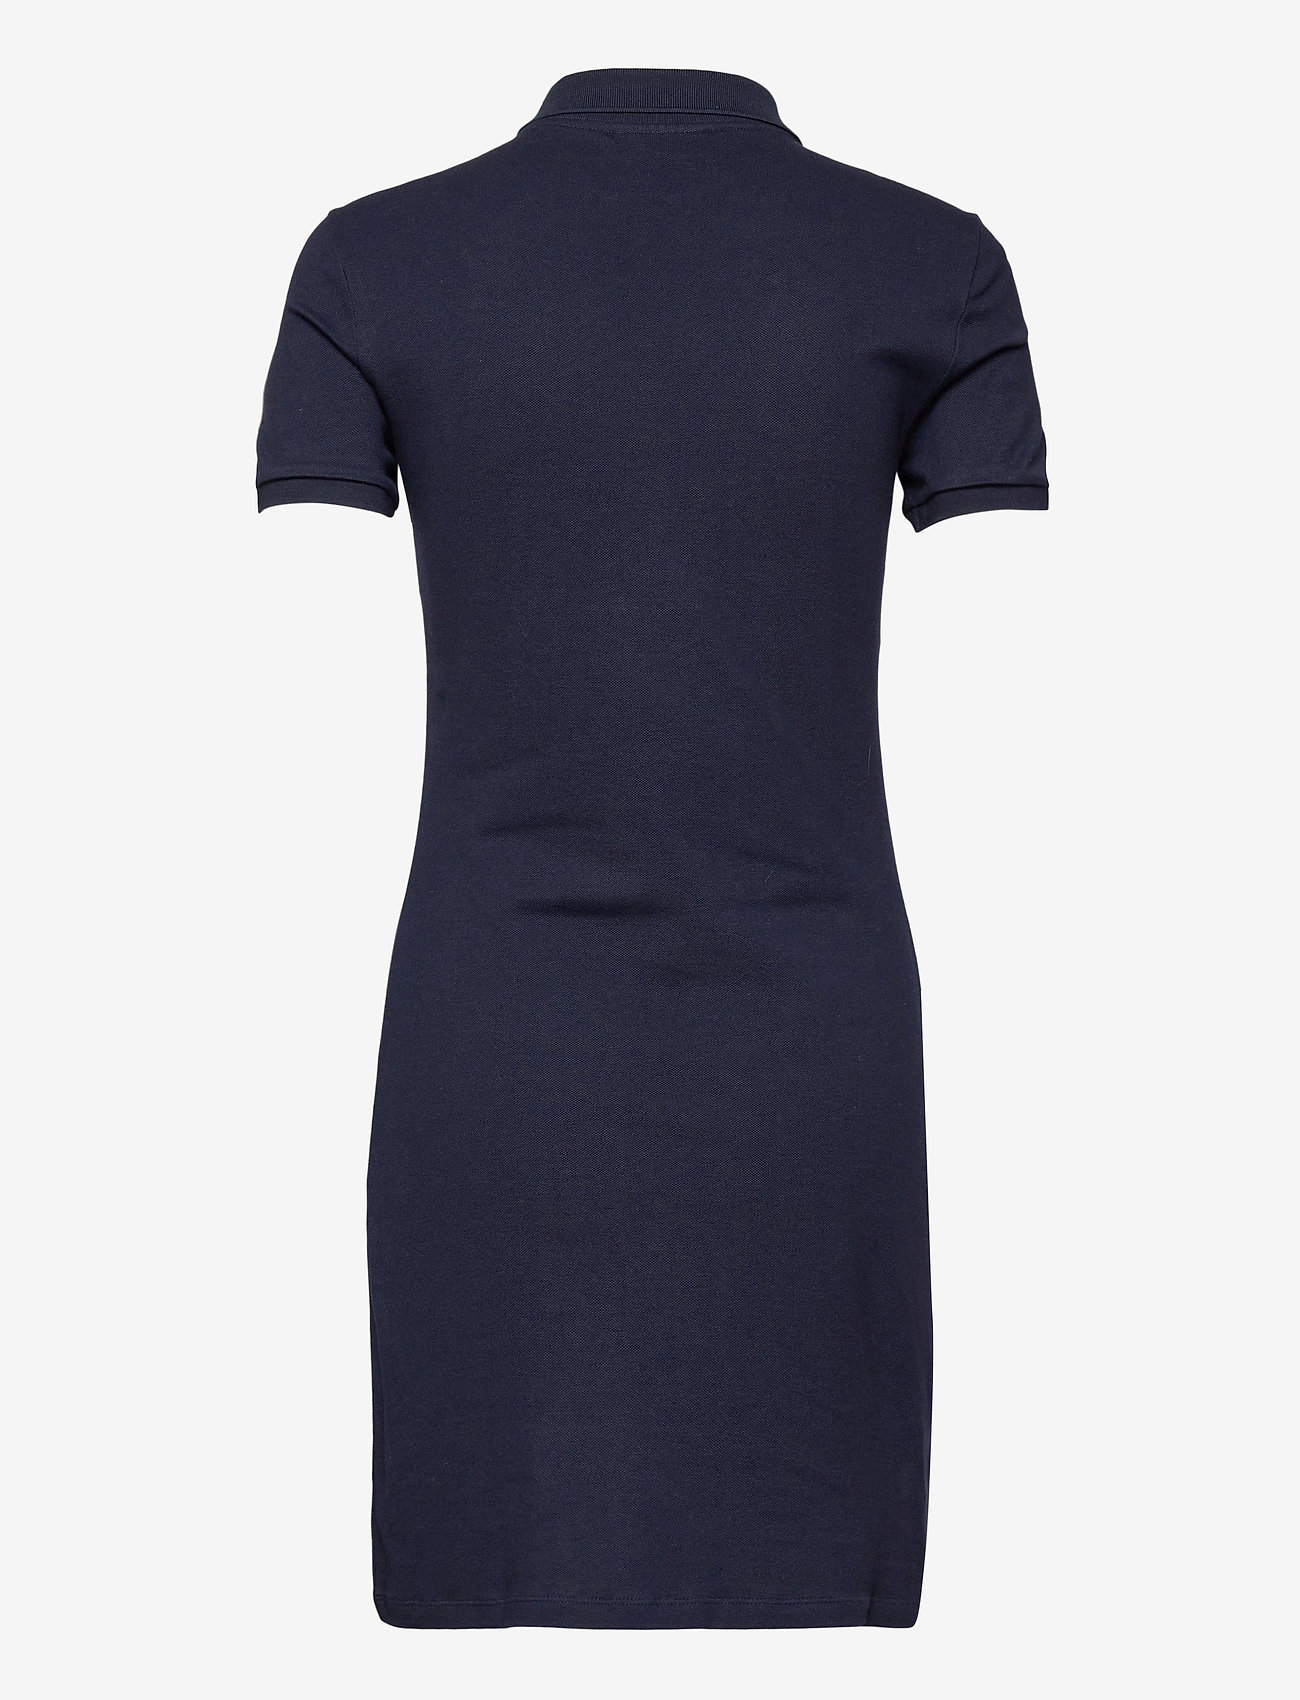 Lacoste - Women s dress - summer dresses - navy blue - 1